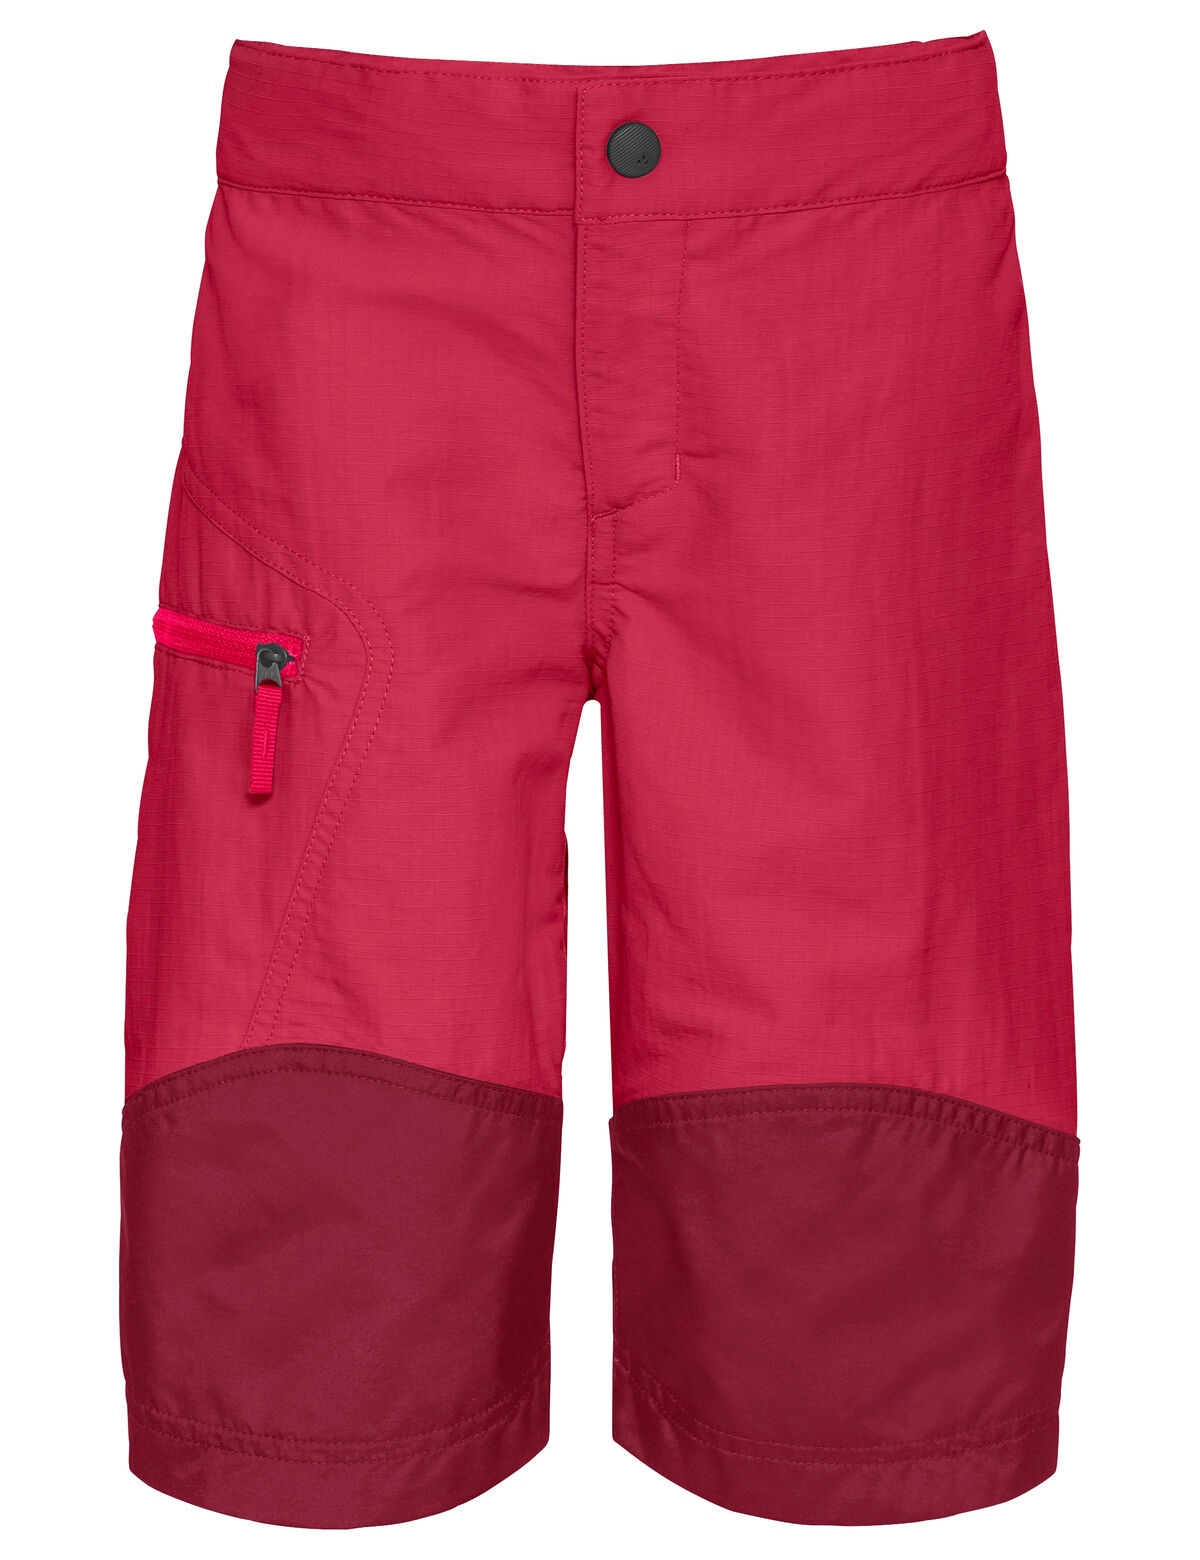 Vaude - Kids Caprea Shorts - Pantalones cortos - Niños